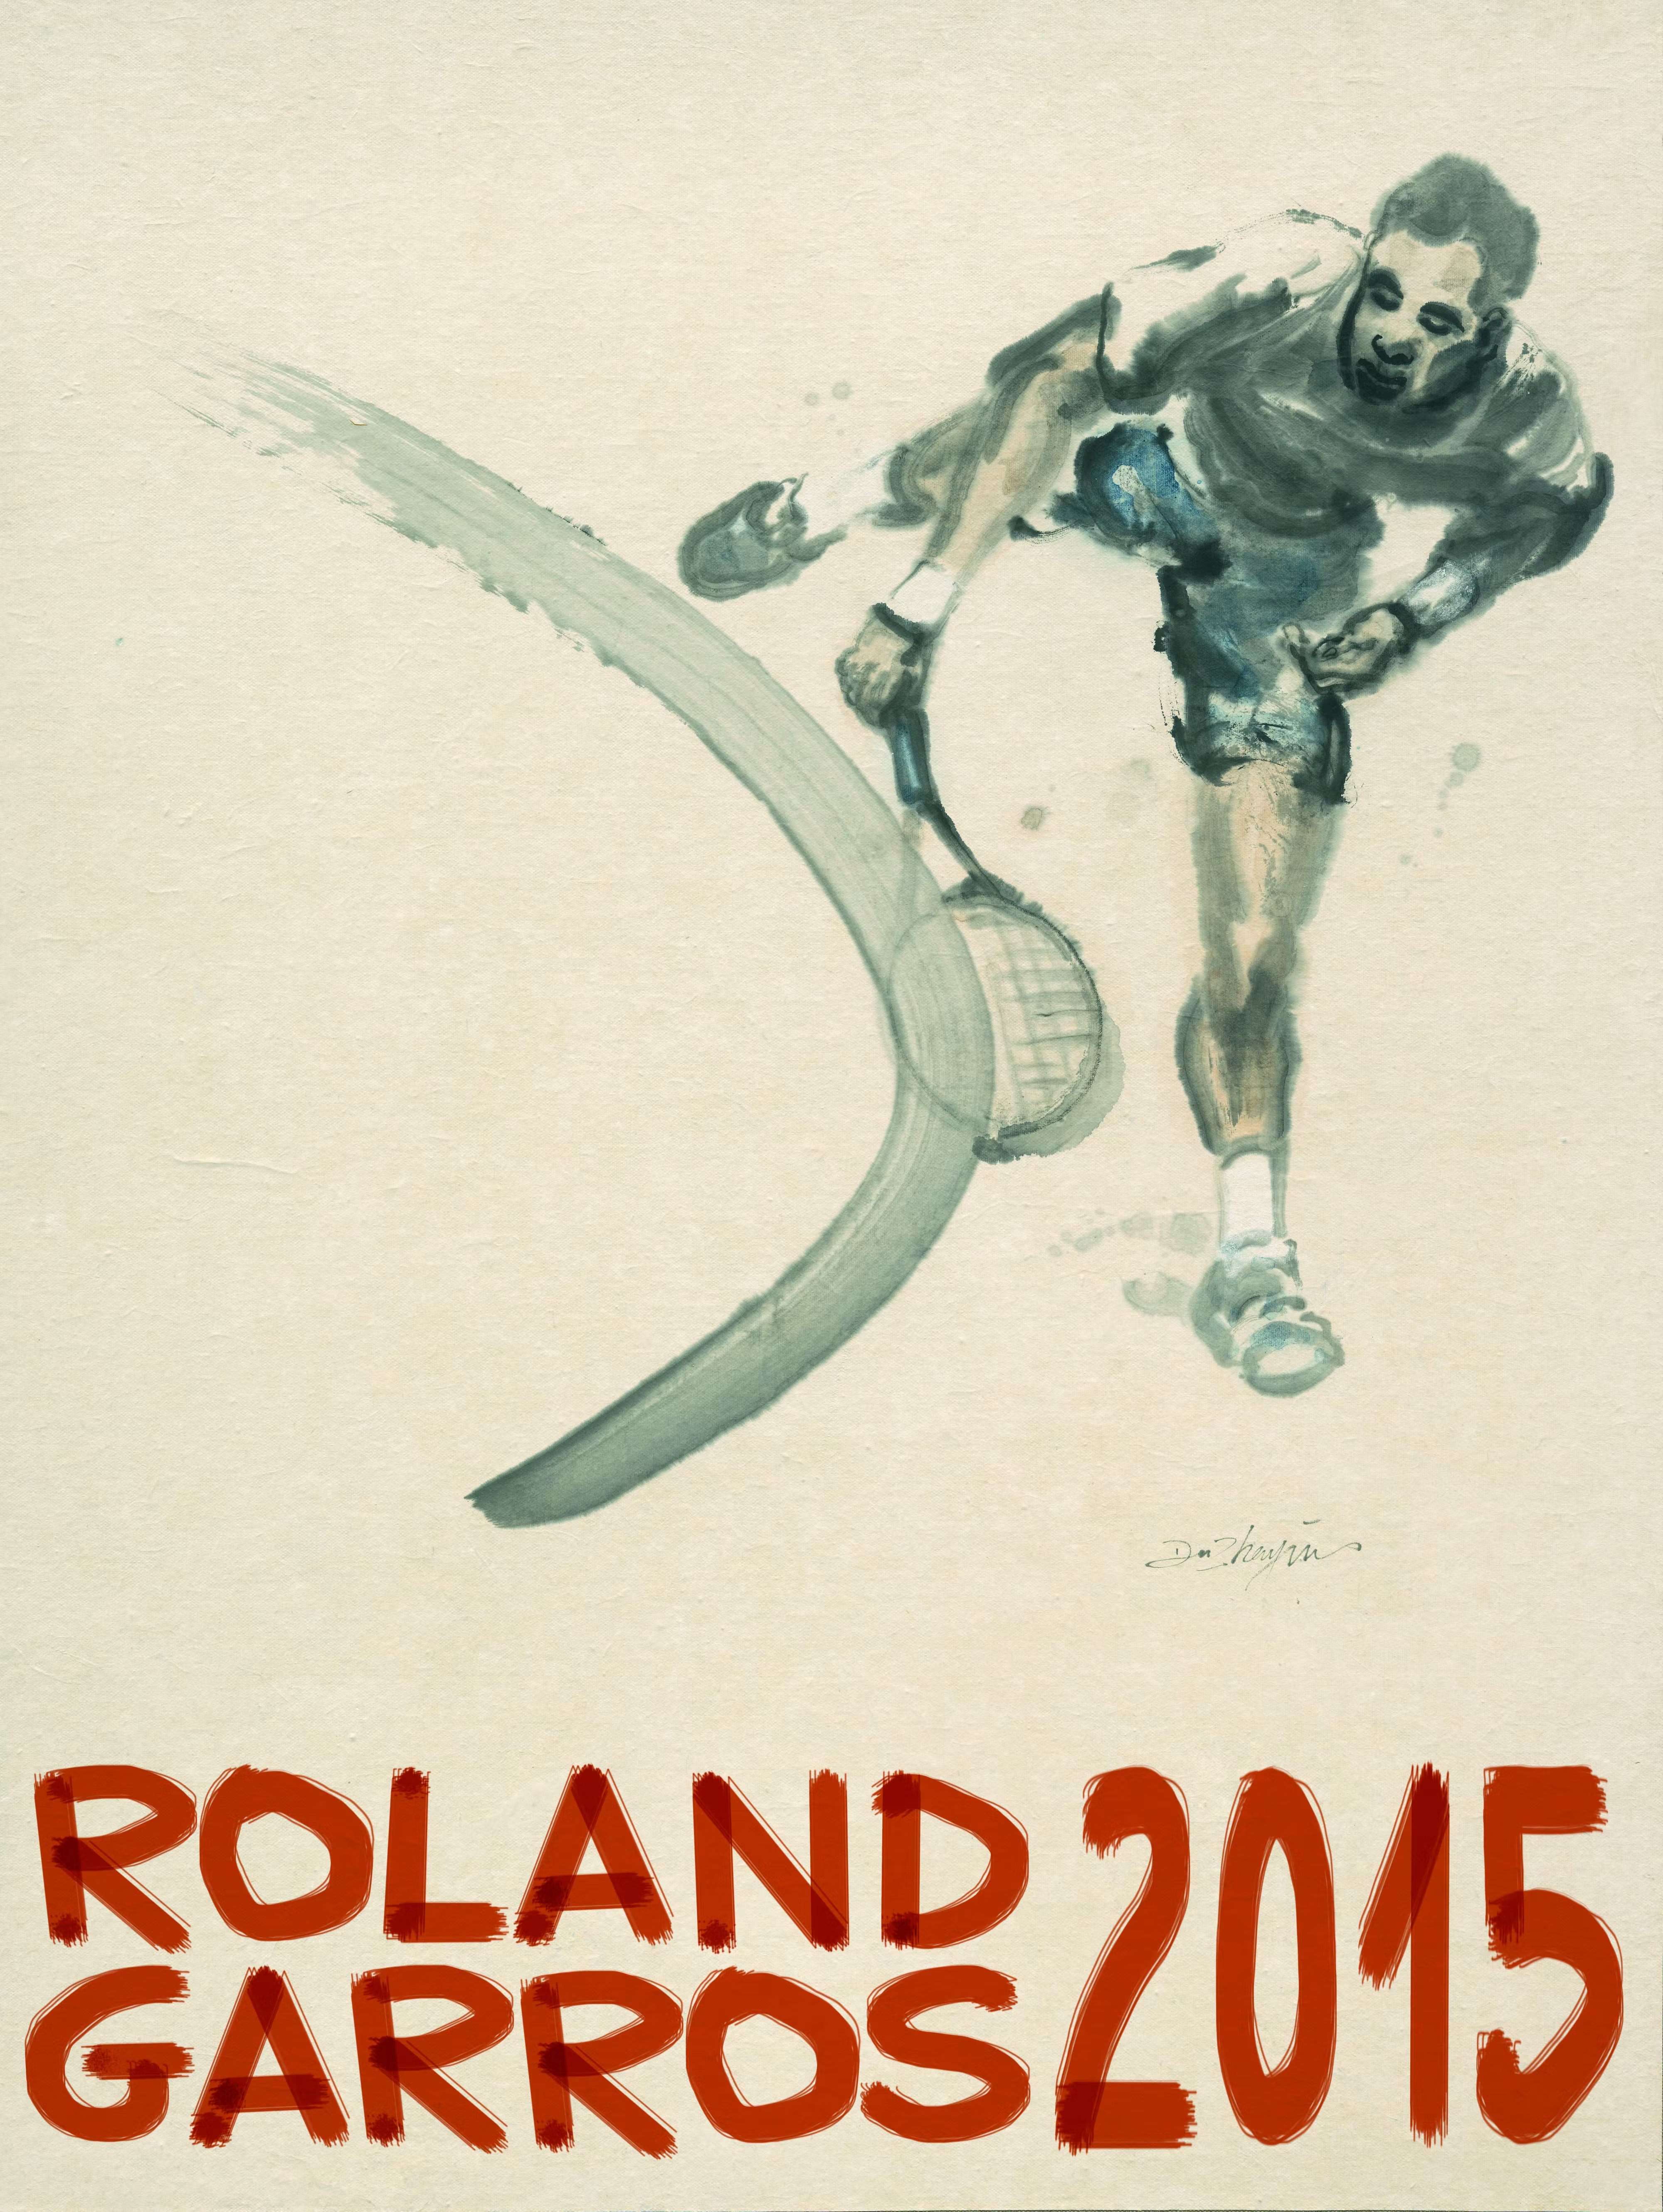 Roland Garros 2015 poster